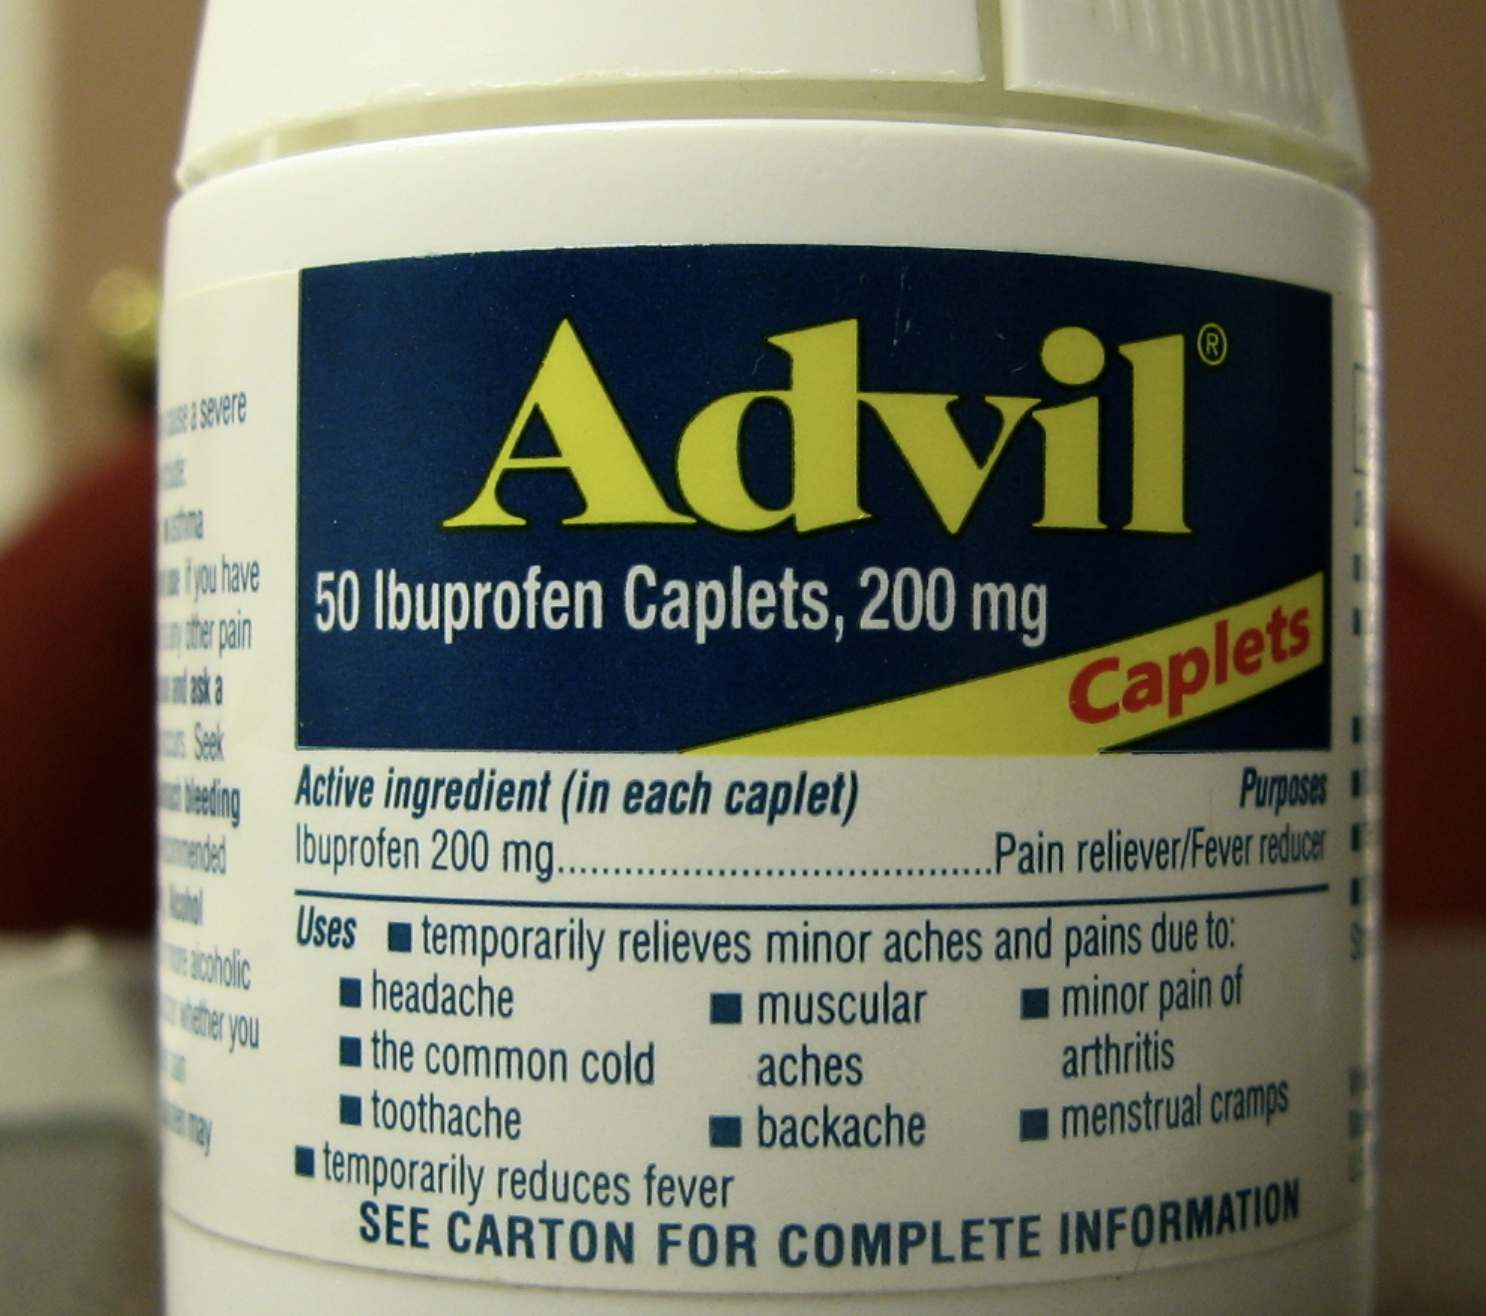 A bottle of Advil 50 lbuprofen Caplets